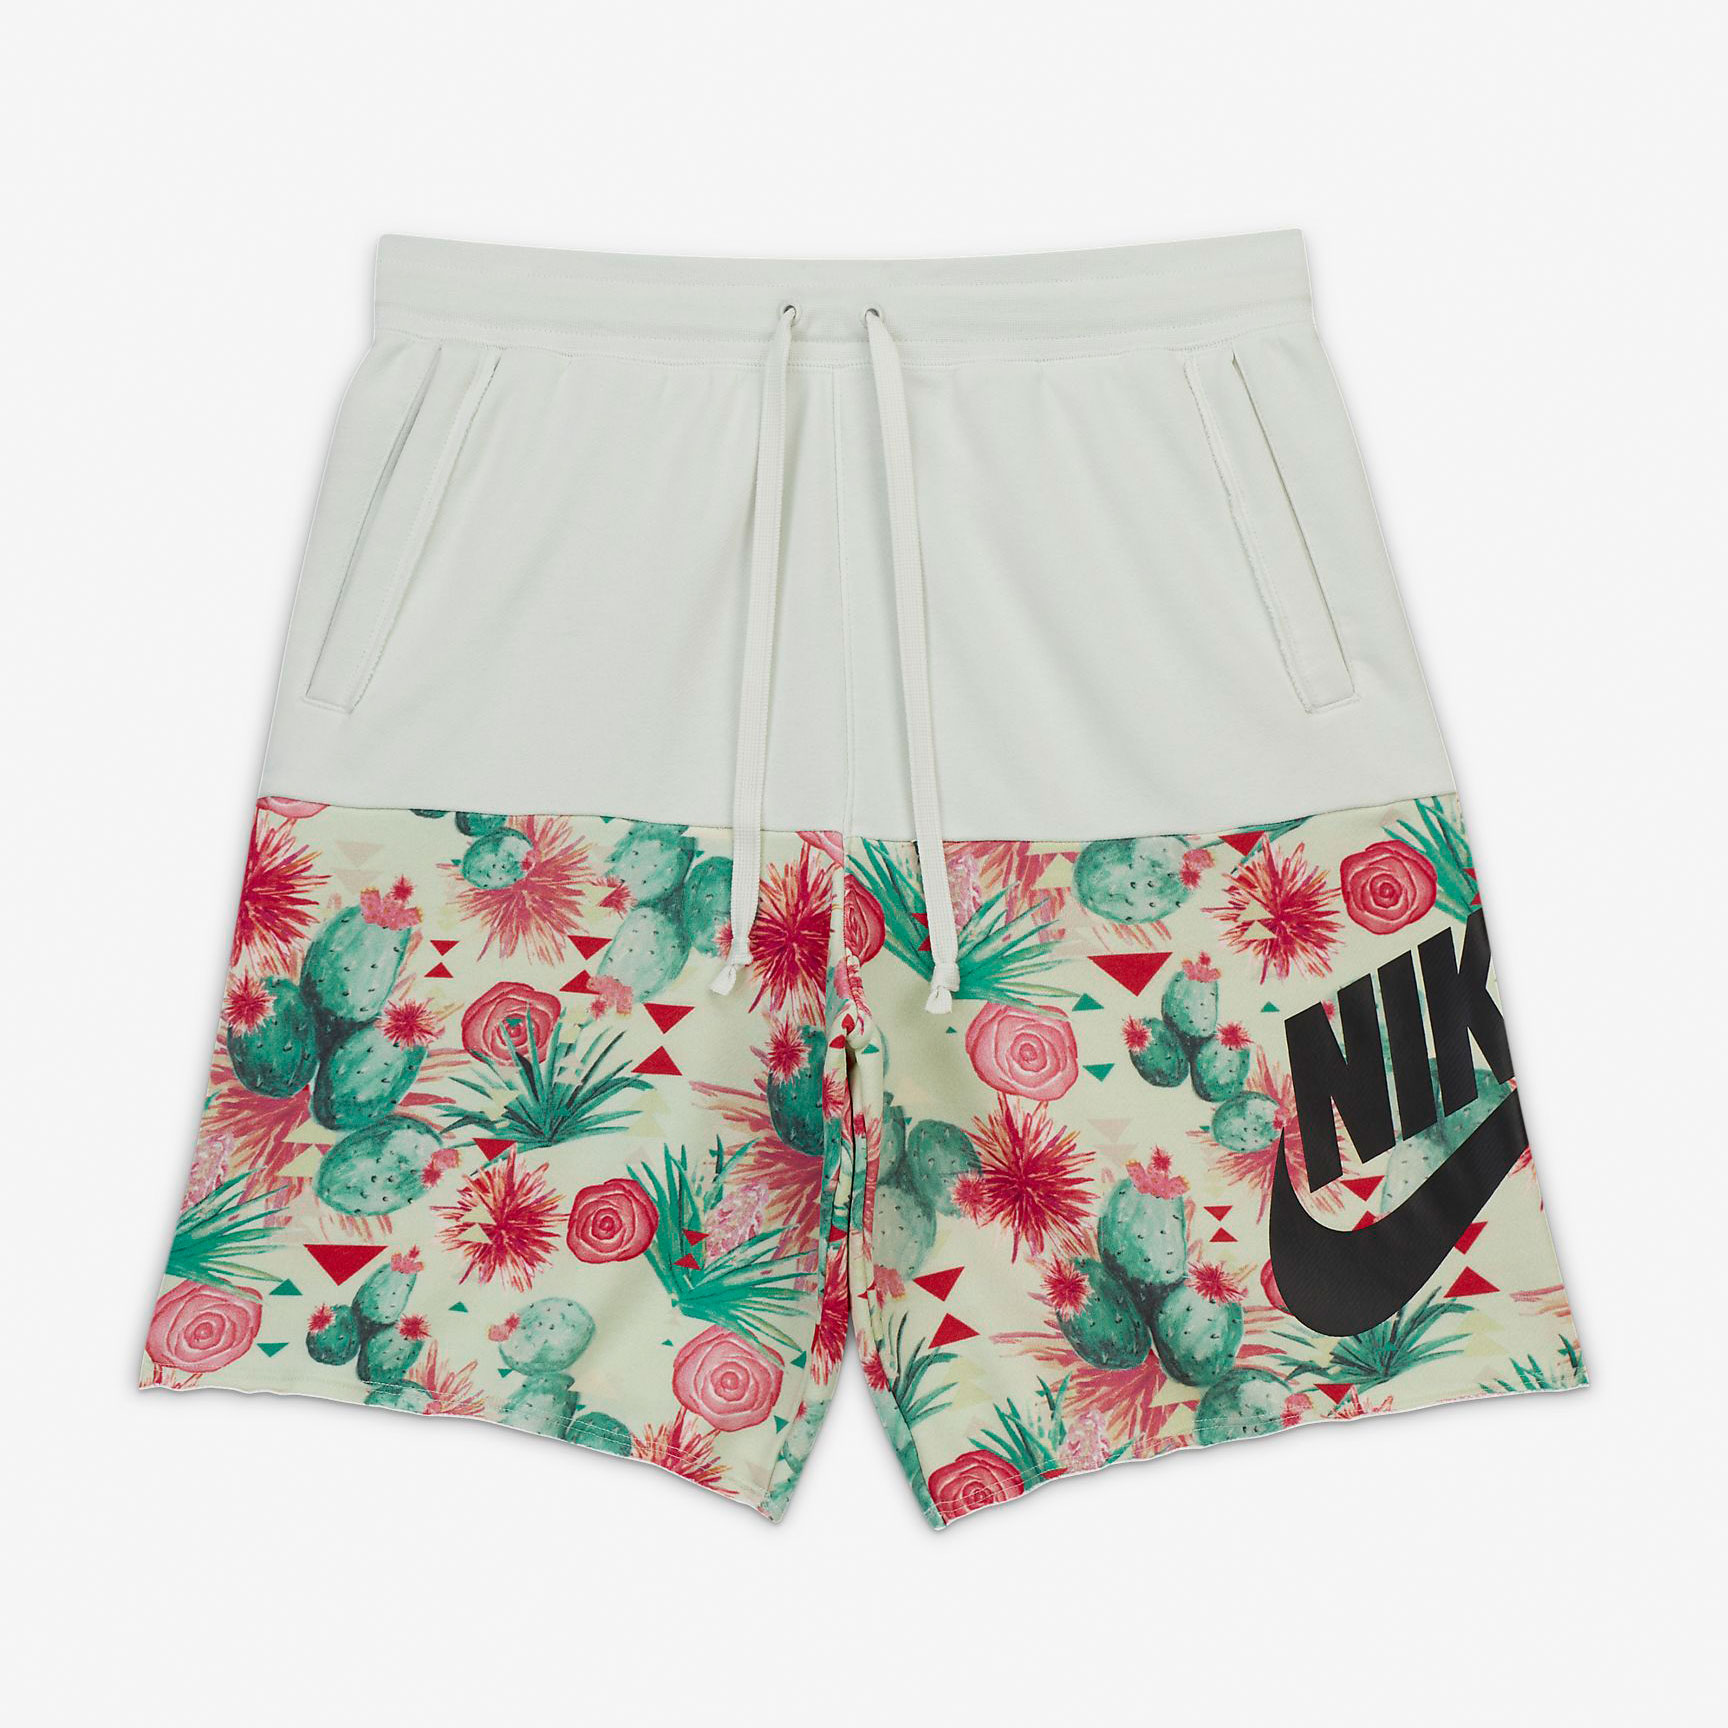 nike-n7-shorts-summer-2020-1